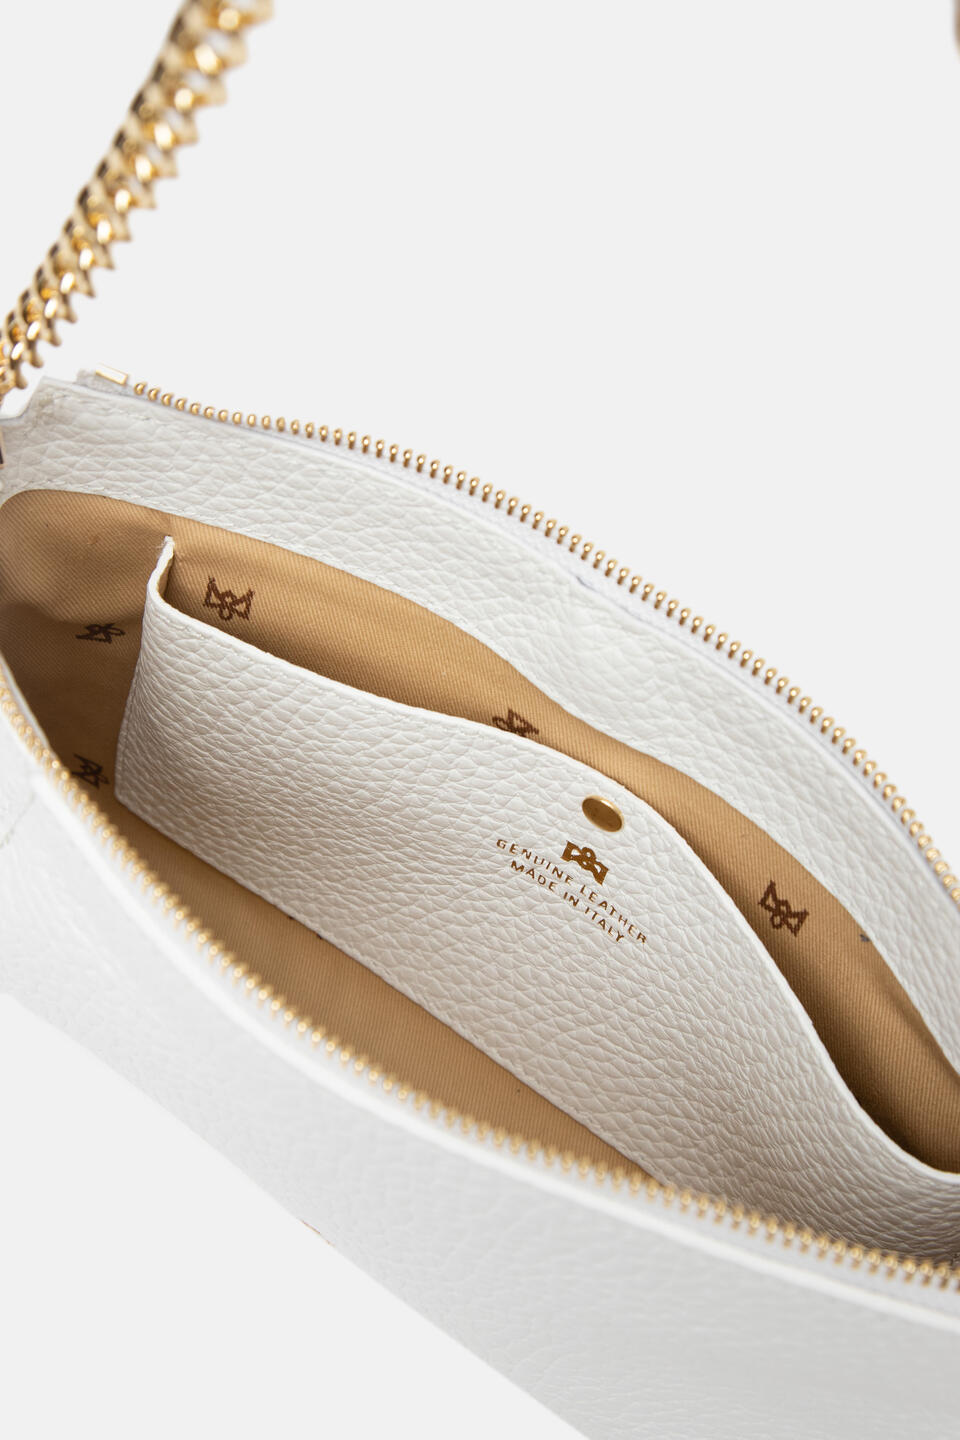 Small shoulder bag White  - Bags - Special Price - Cuoieria Fiorentina